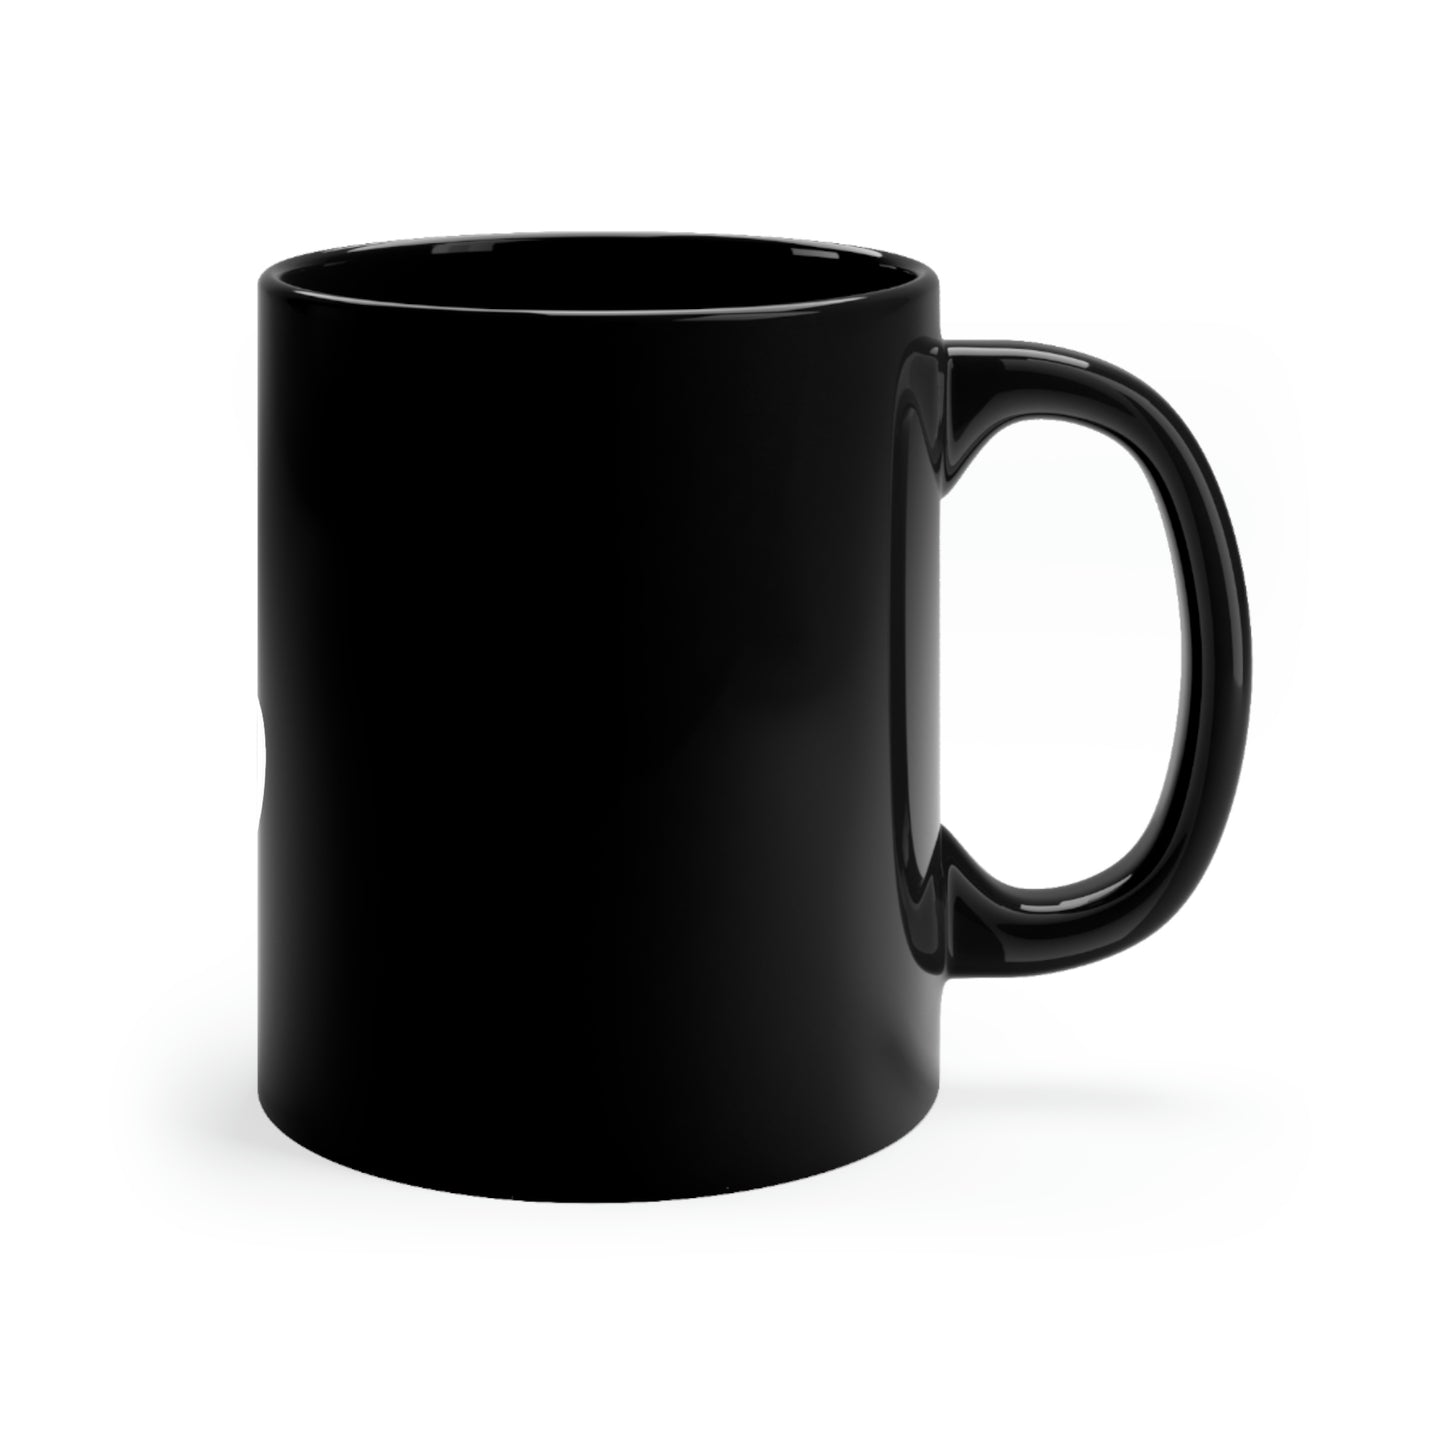 Never Give Up - Black mug 11oz